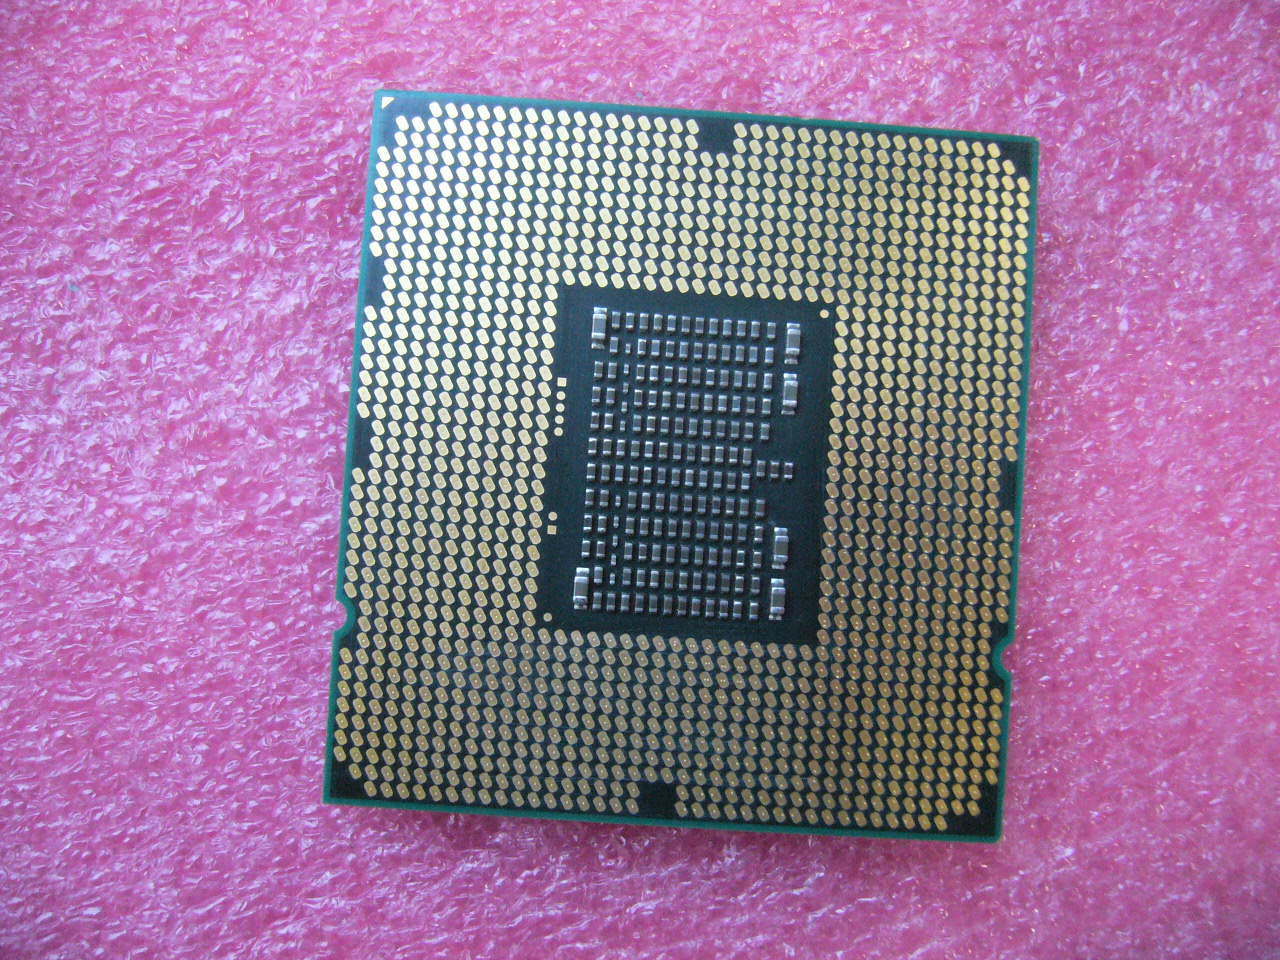 QTY 1x INTEL Six-Cores Xeon CPU E5645 2.40GHZ/12MB LGA1366 SLBWZ - Click Image to Close